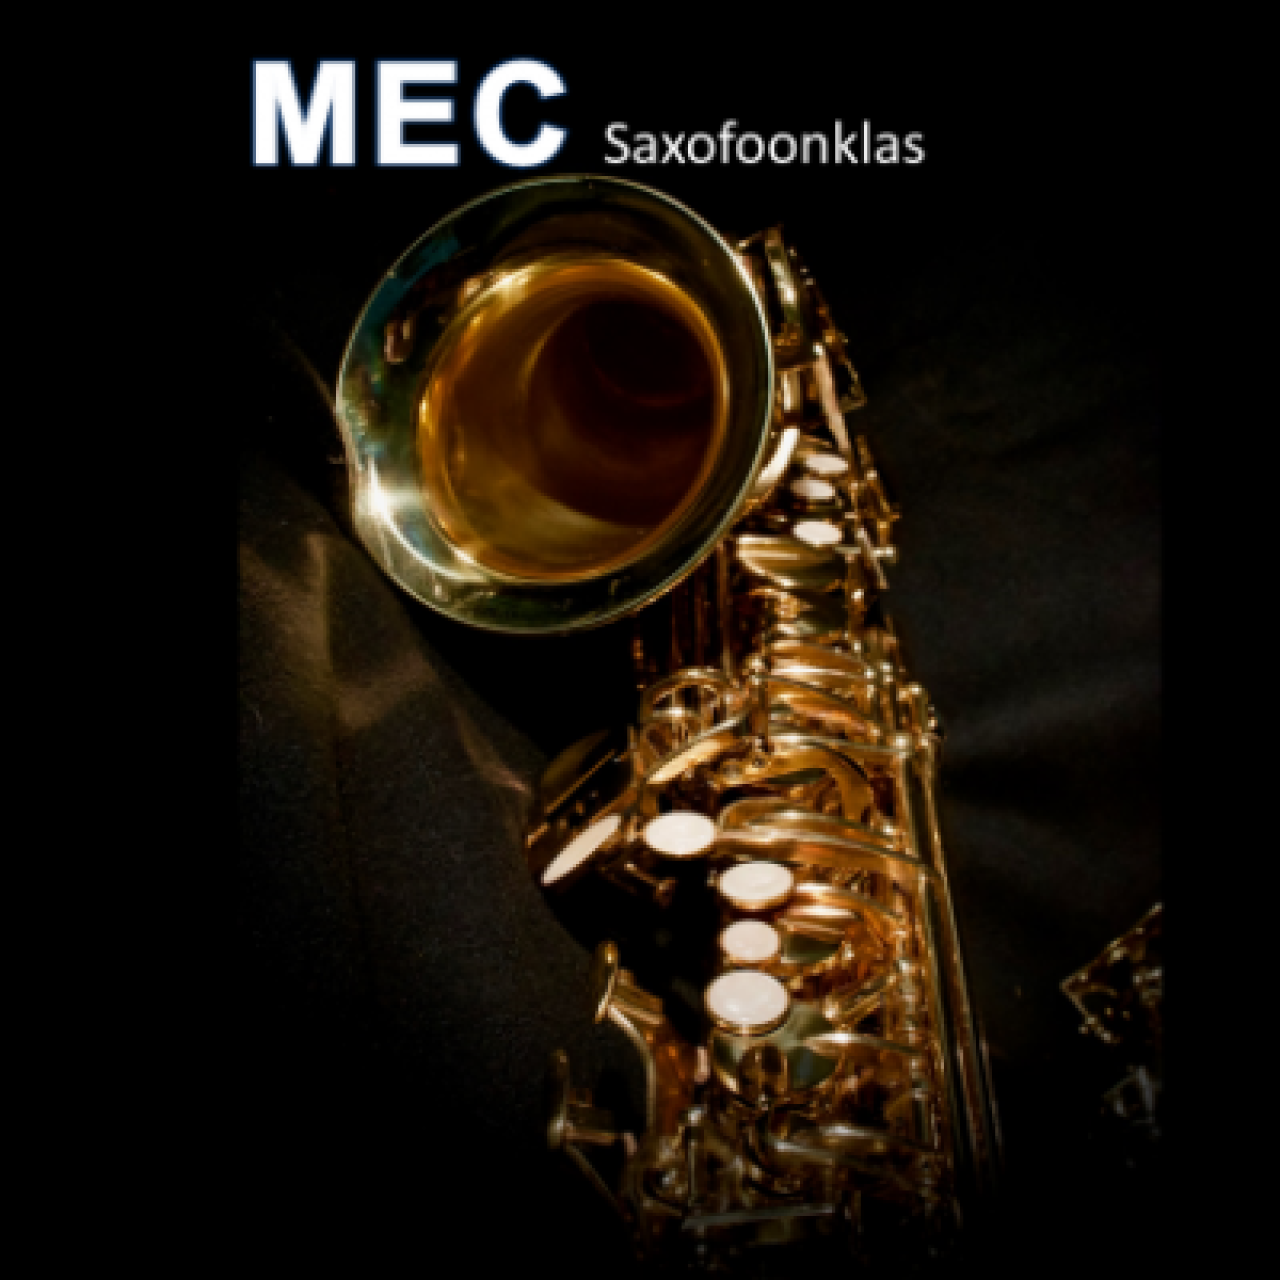 MEC Saxofoonklas